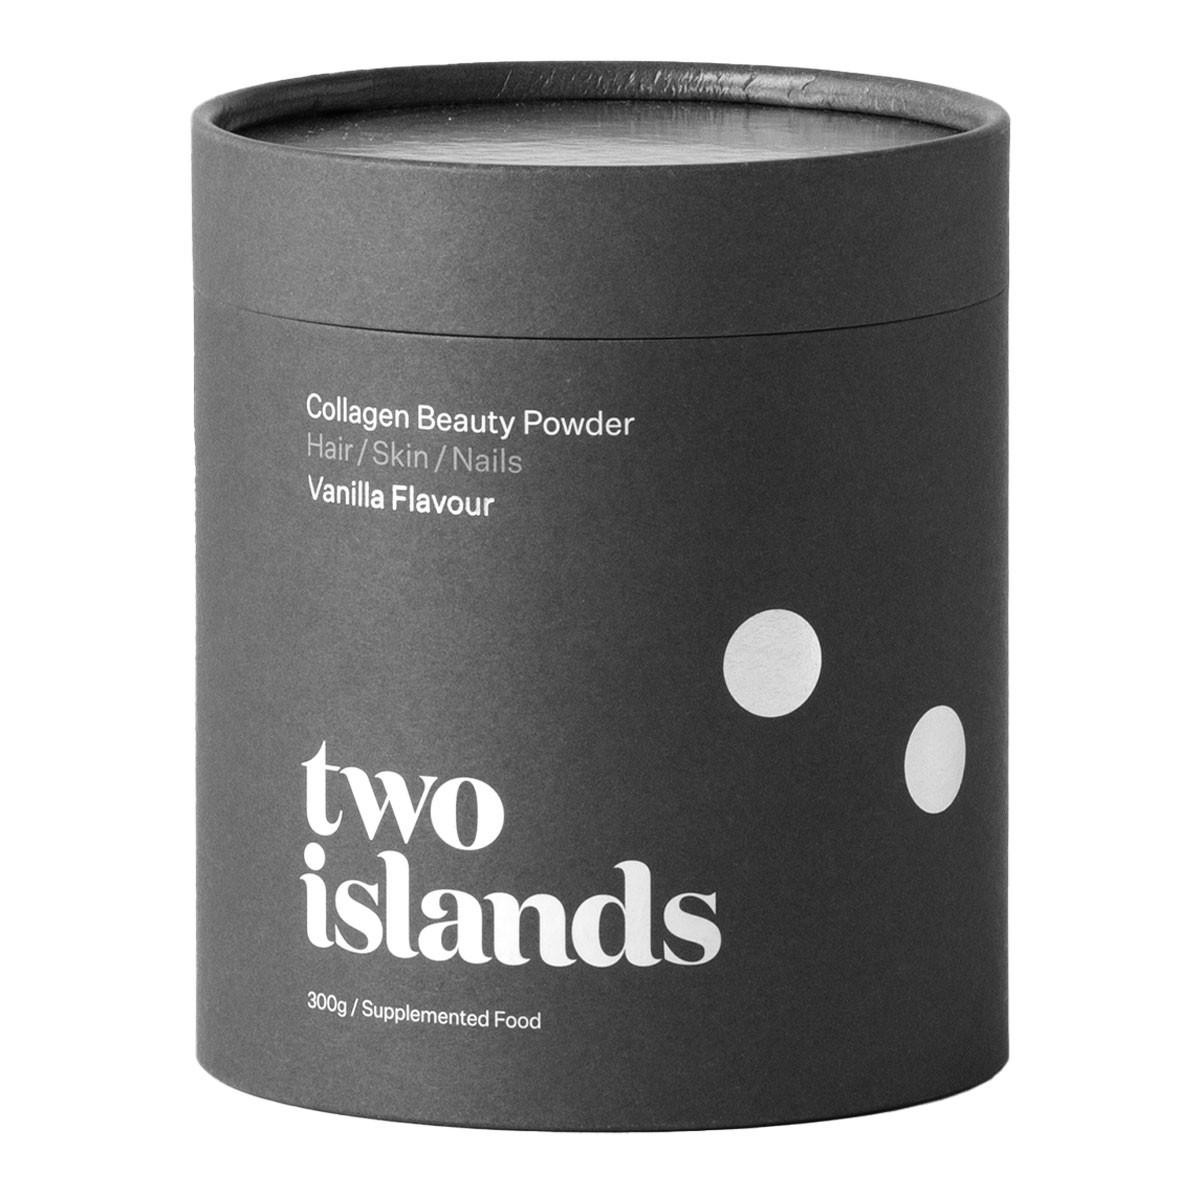 Two Islands Collagen Beauty Powder - Vanilla